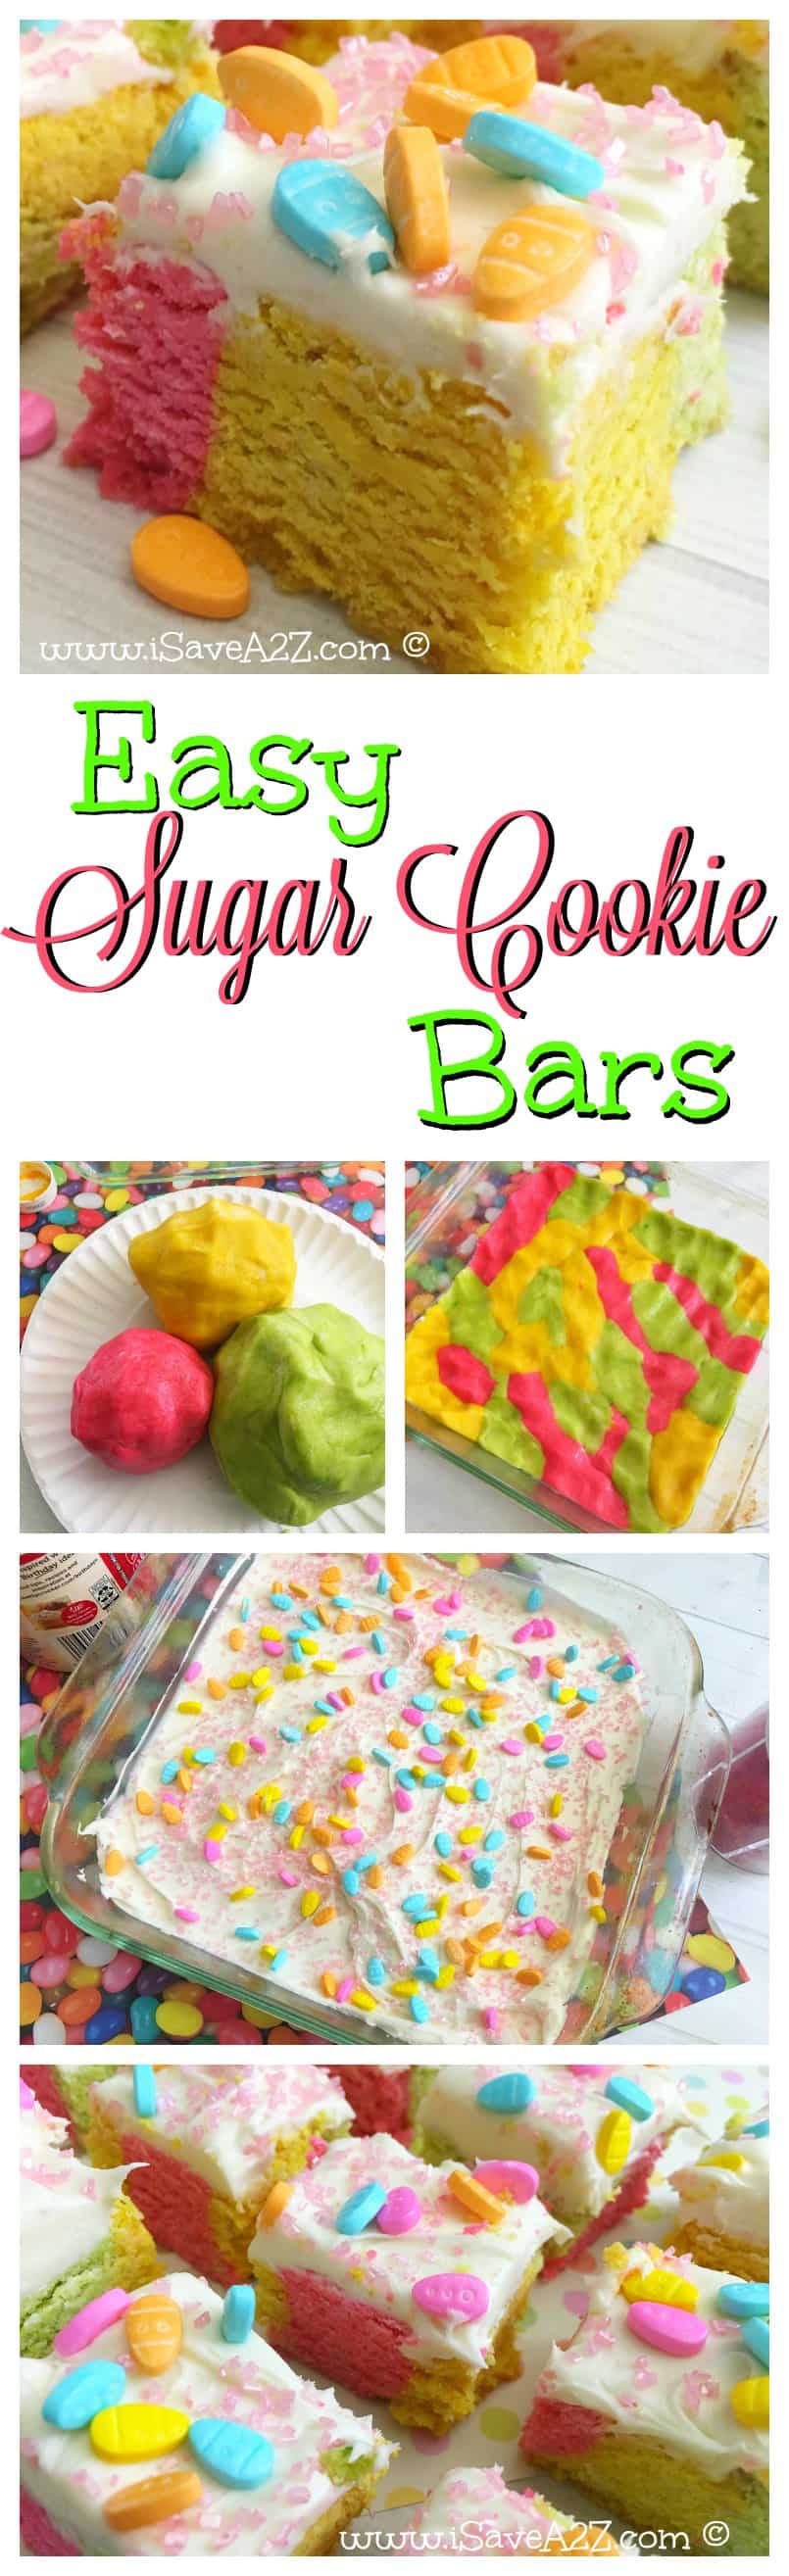 Easy Sugar Cookie Bars Recipe